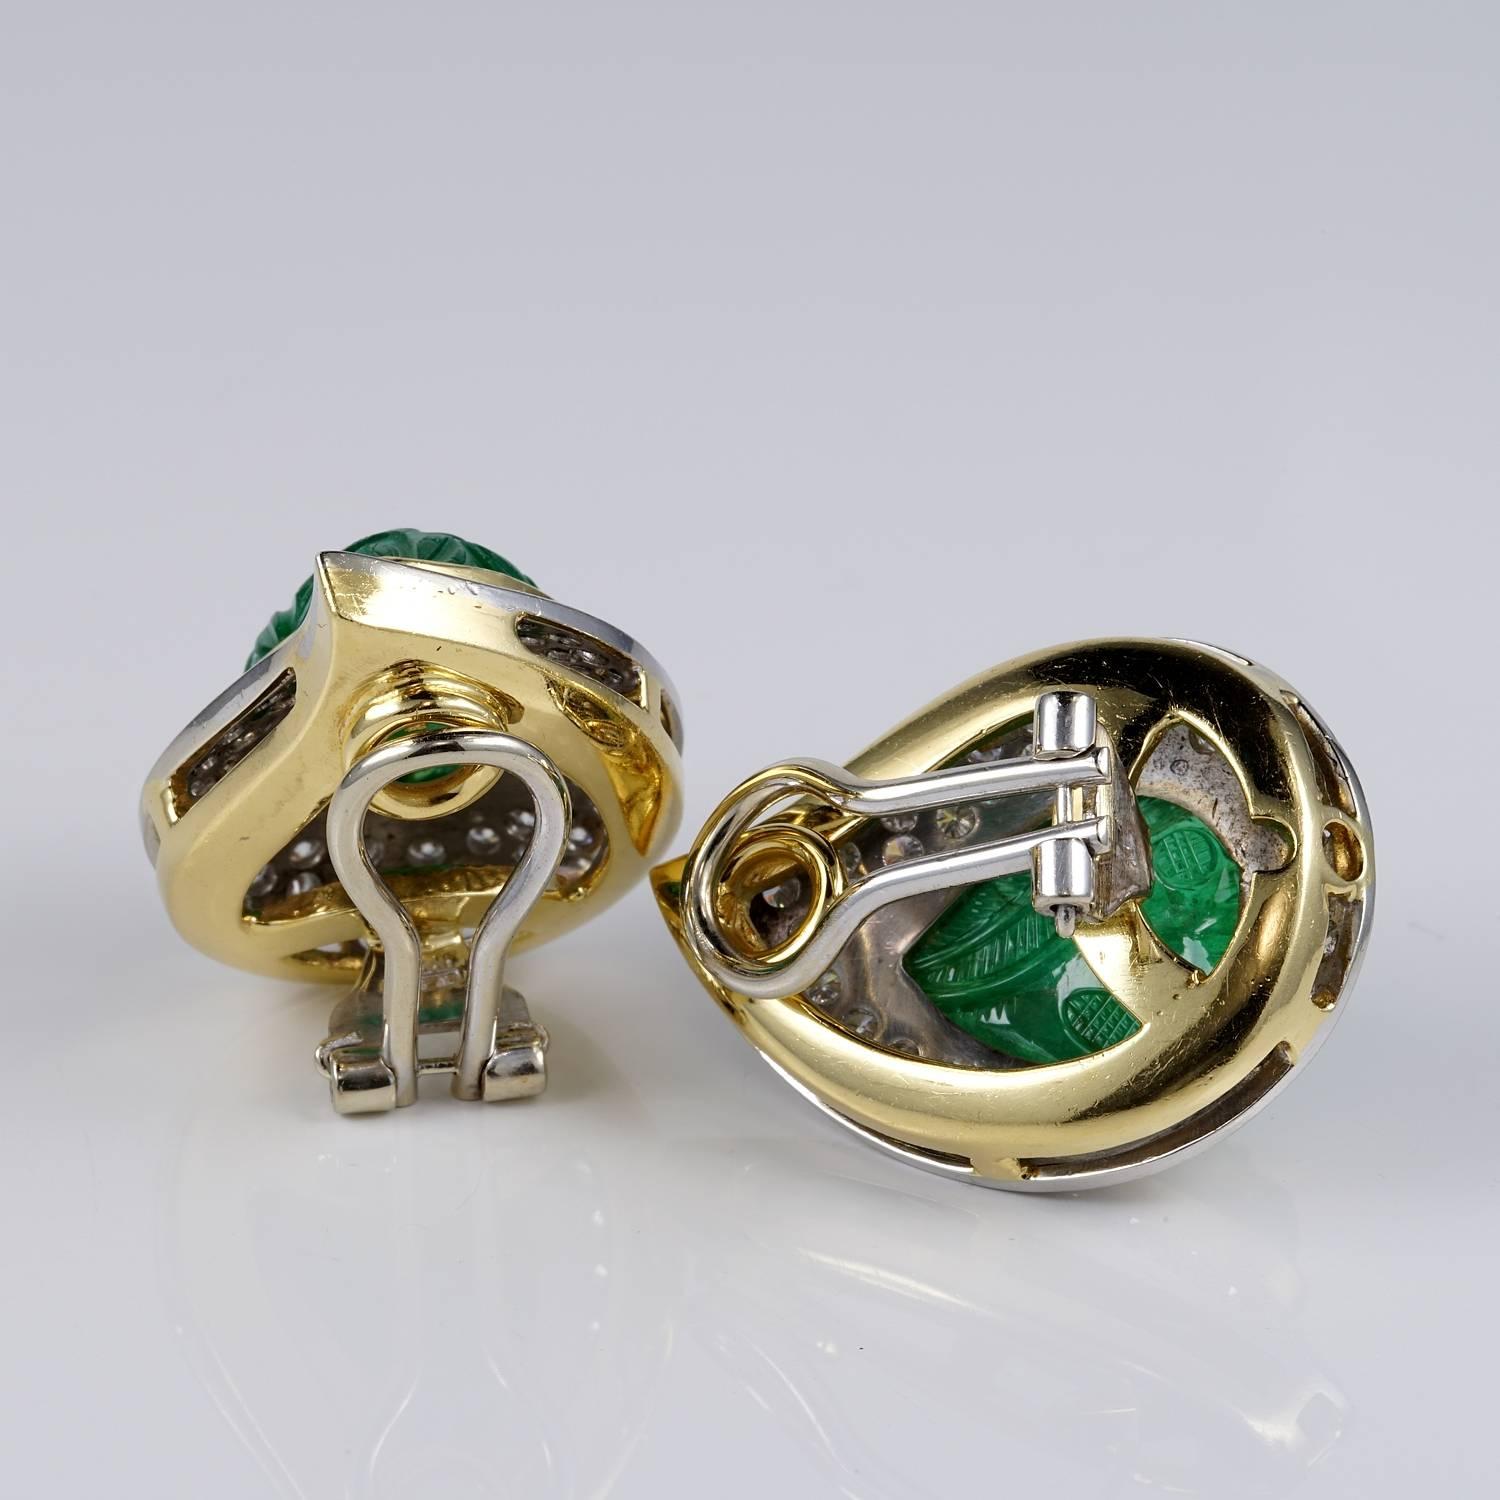 22.0 Carat Carved Mughal Emerald 3.0 Carat Diamond Rare Earrings For Sale 2